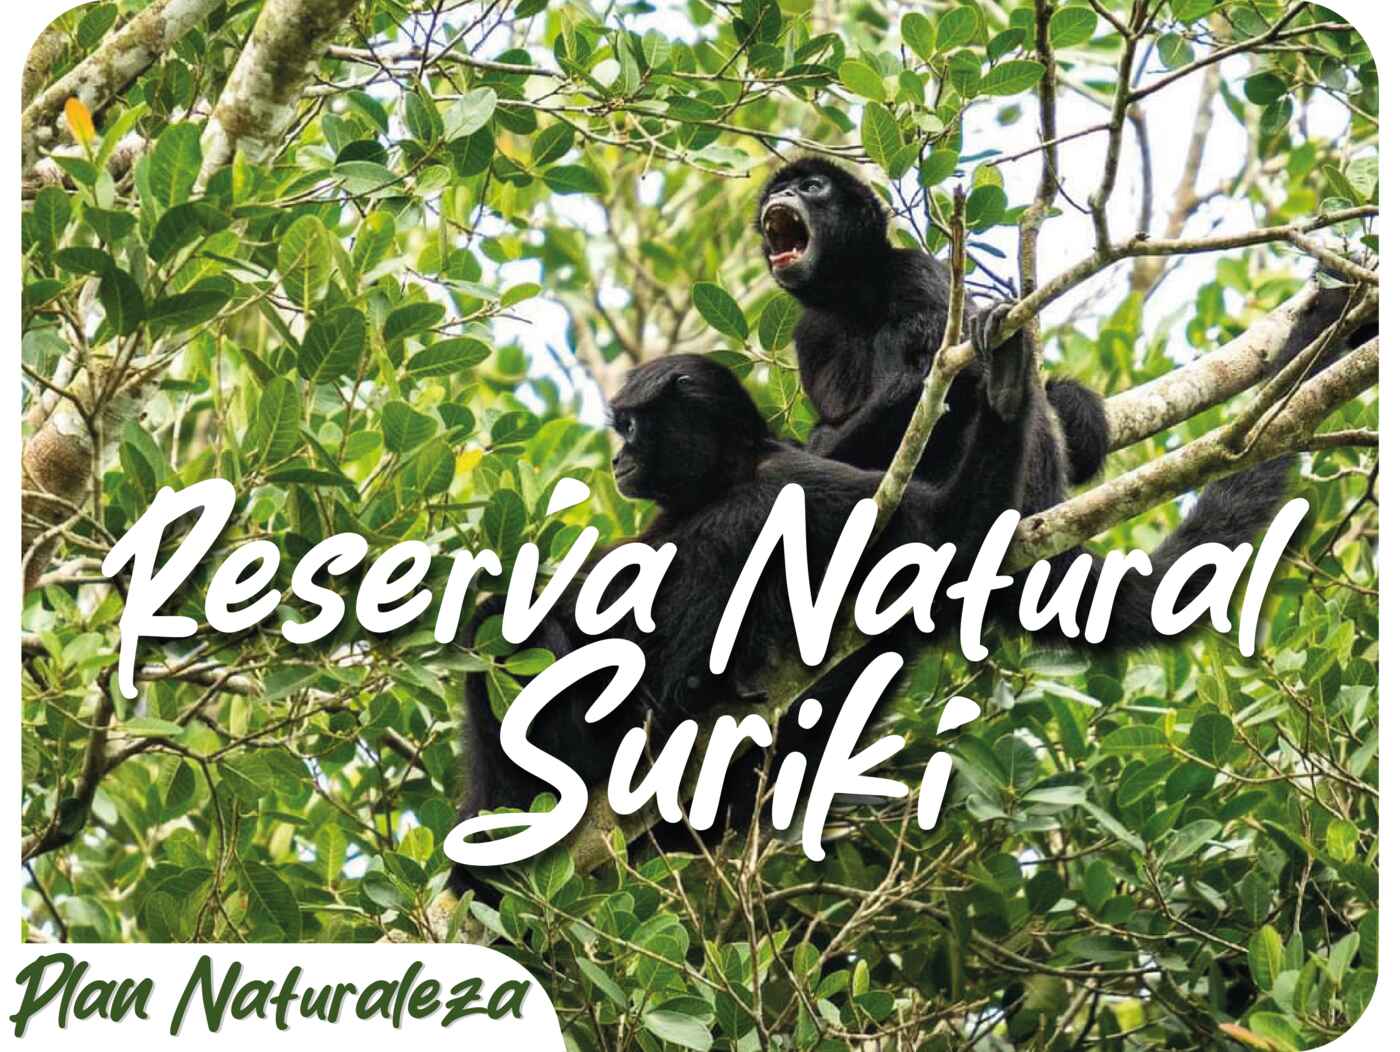 Plan Naturaleza - Reserva Natural Surik